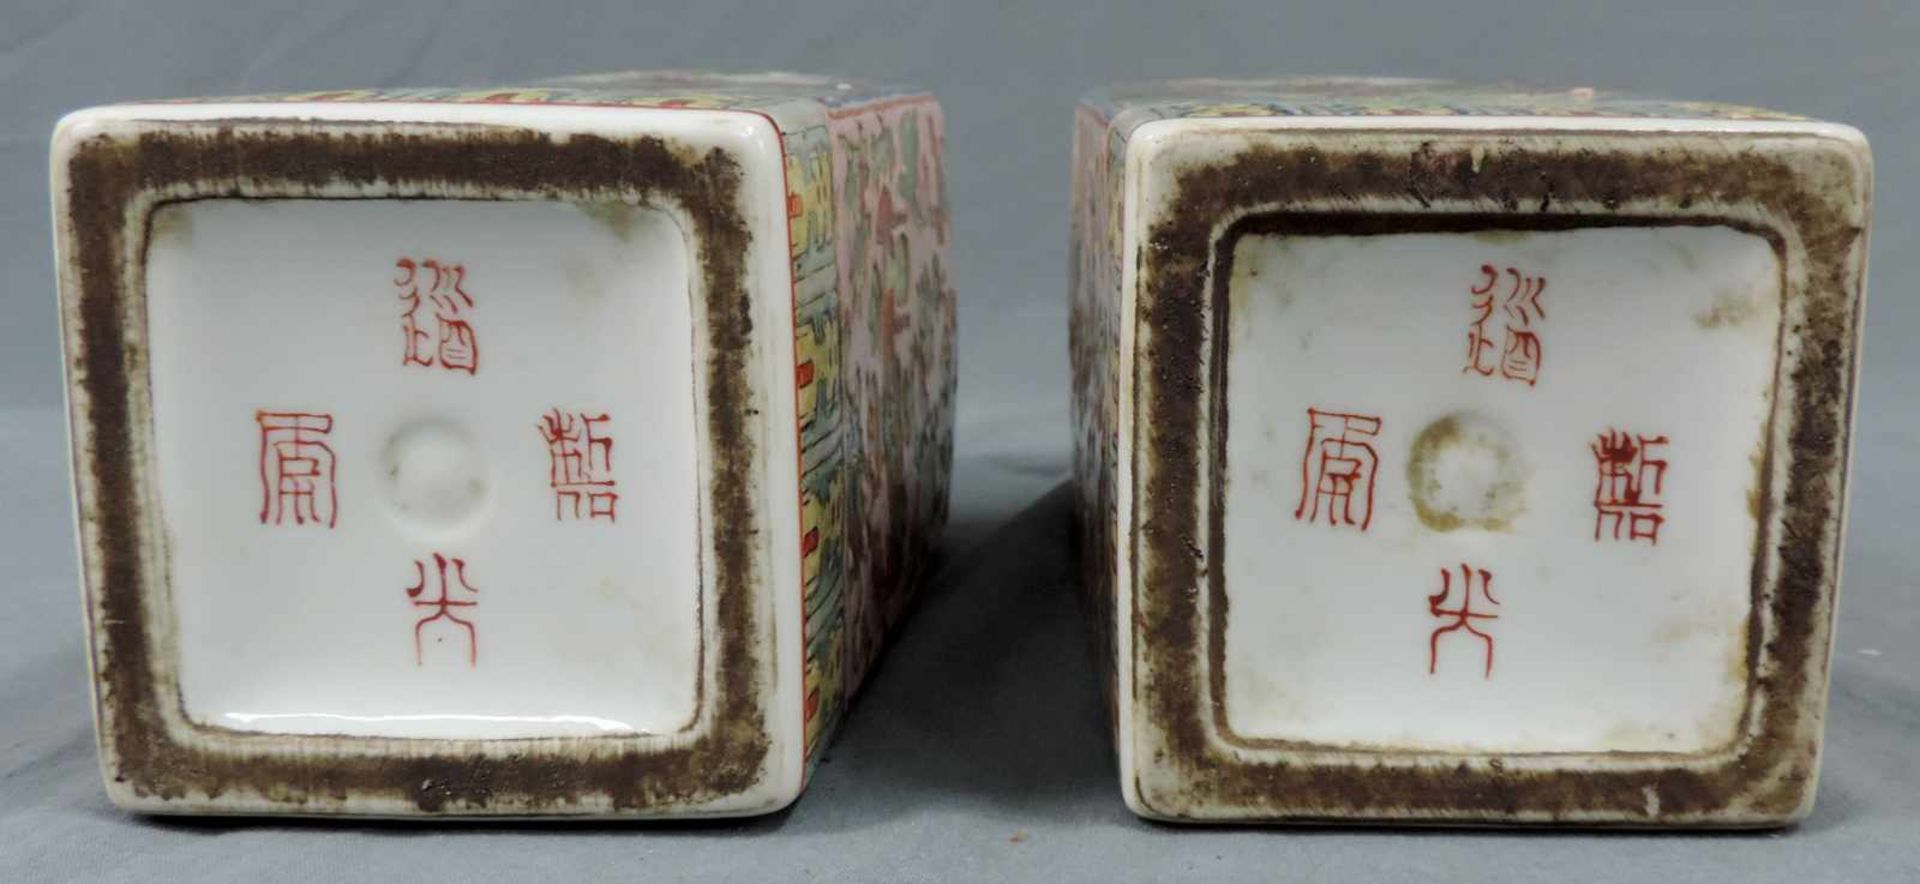 Paar Vasen. China / Japan. Guangxu Nian Zhi Marke. 36 cm hoch. Porzellan. Pair of vases. China / - Image 3 of 4